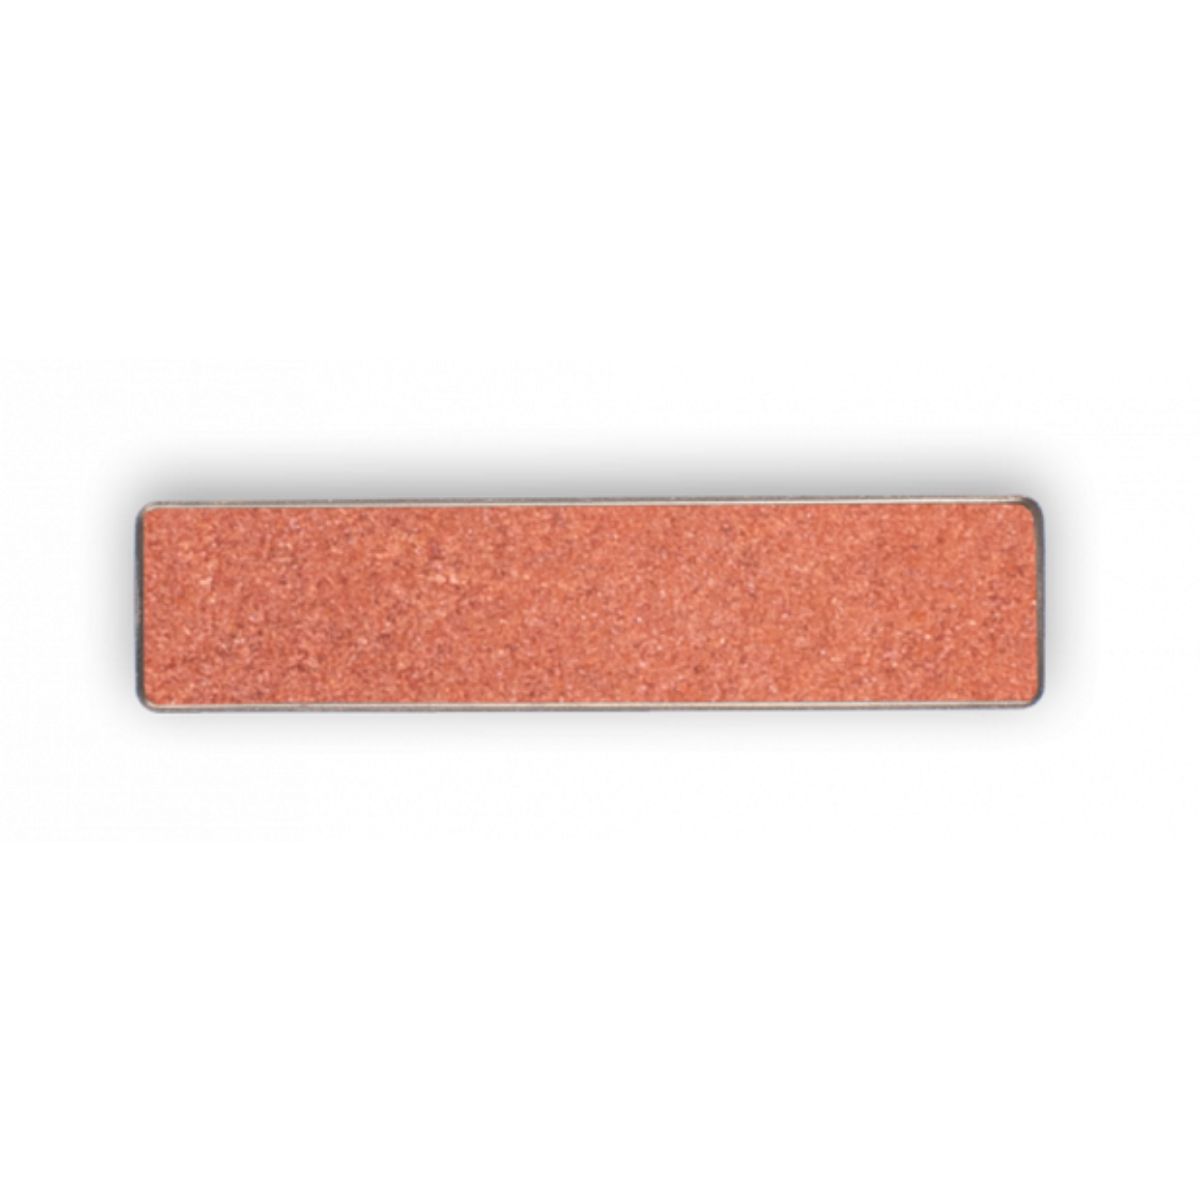 Recarga Sombra de Ojos Vegana – Rusty Copper 1,5 g